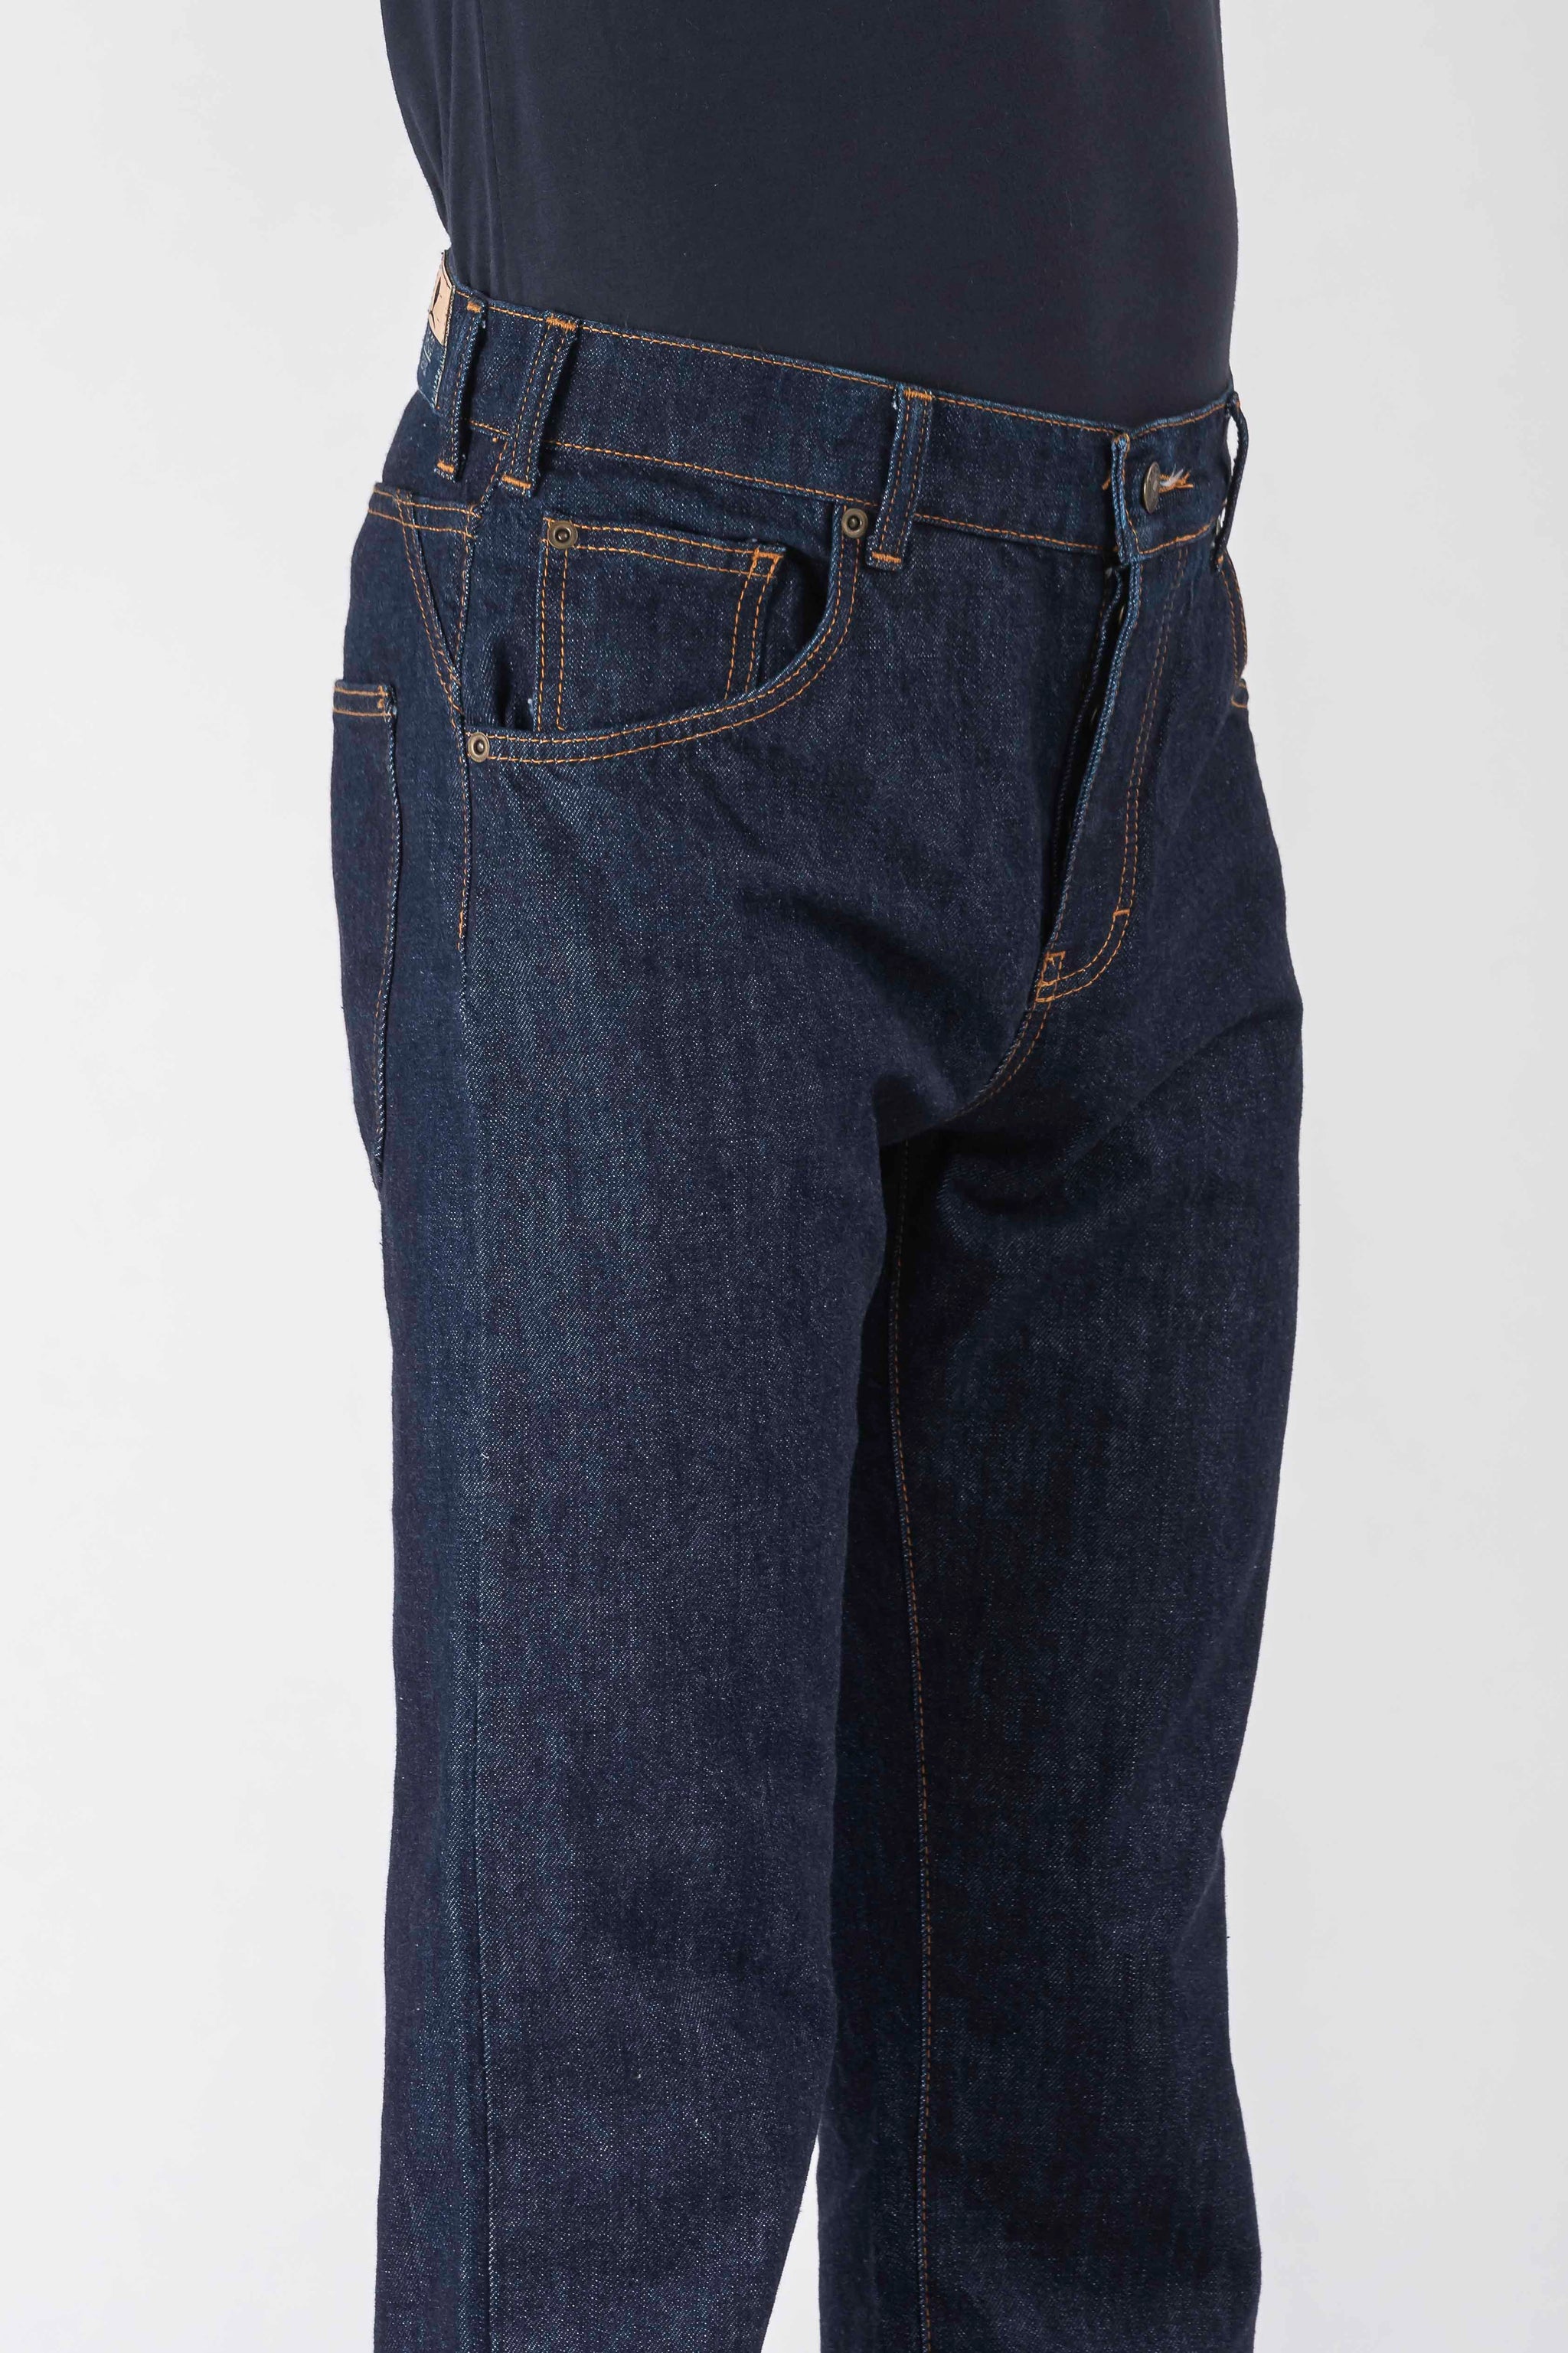 Par.co DENIM Straight Pine Jeans rectes foscos moda sostenible moda ètica